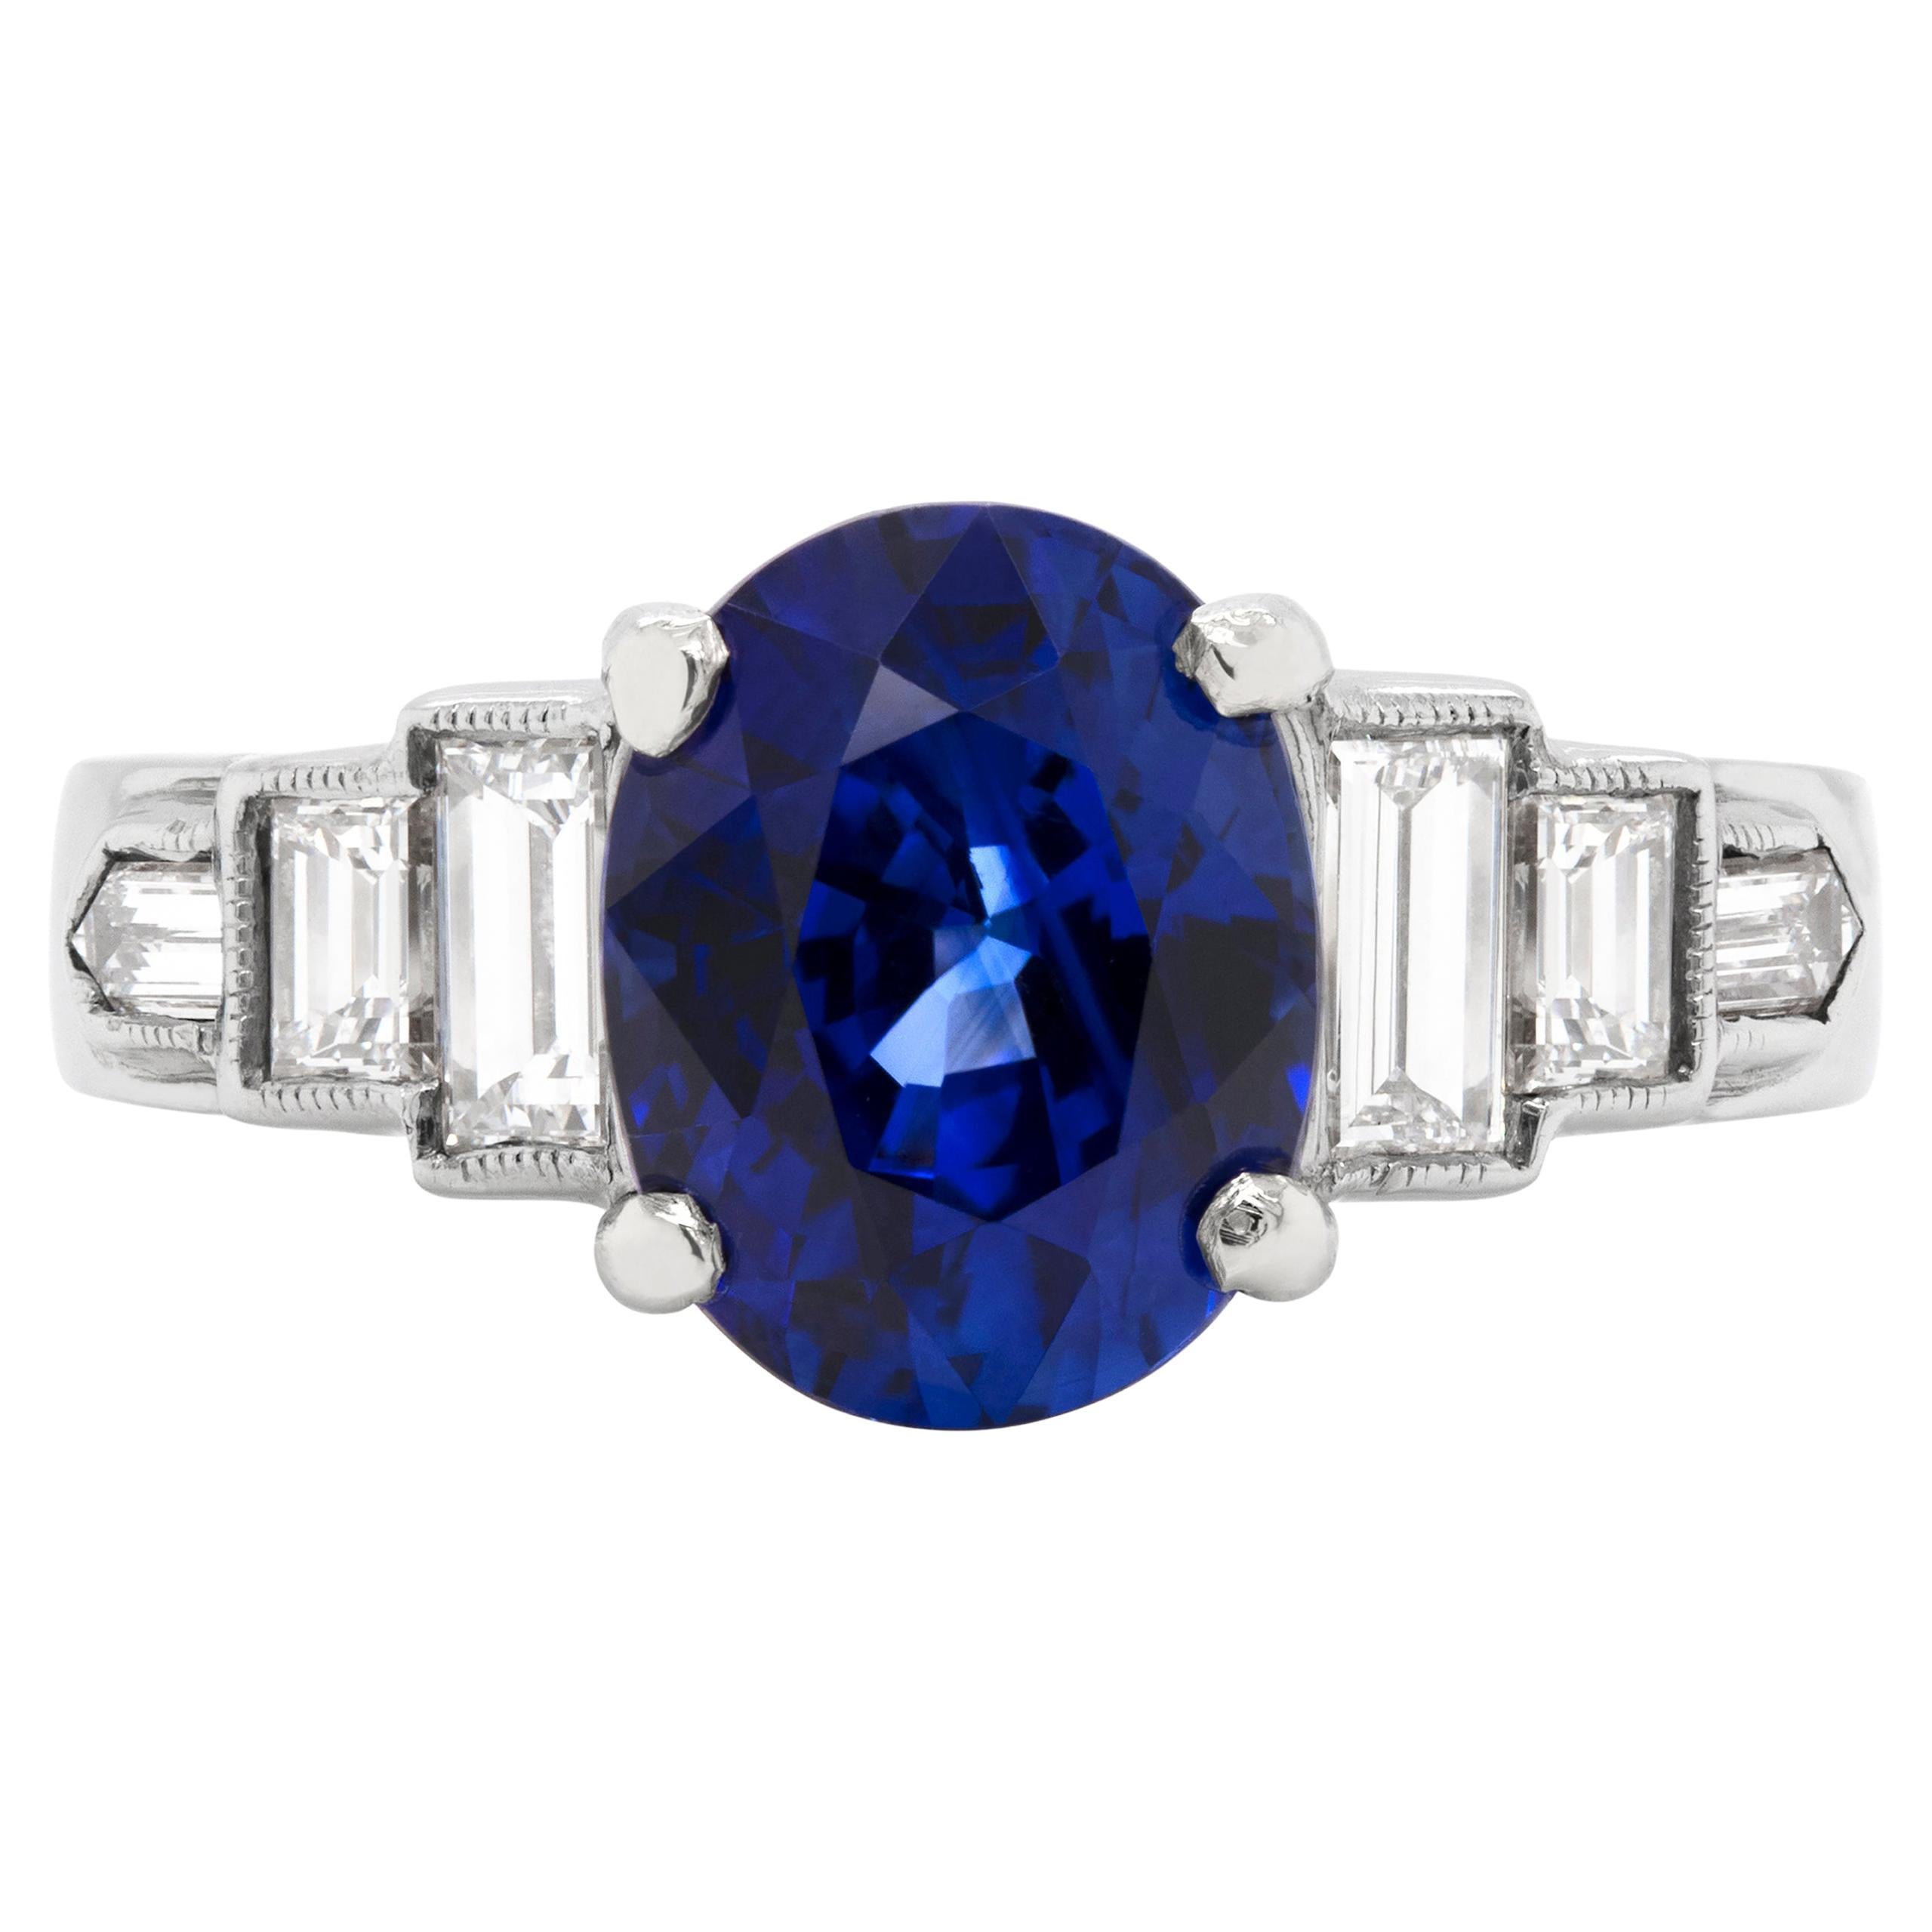 Platin-Verlobungsring mit 3,18 Karat ovalem blauem Saphir und Diamant